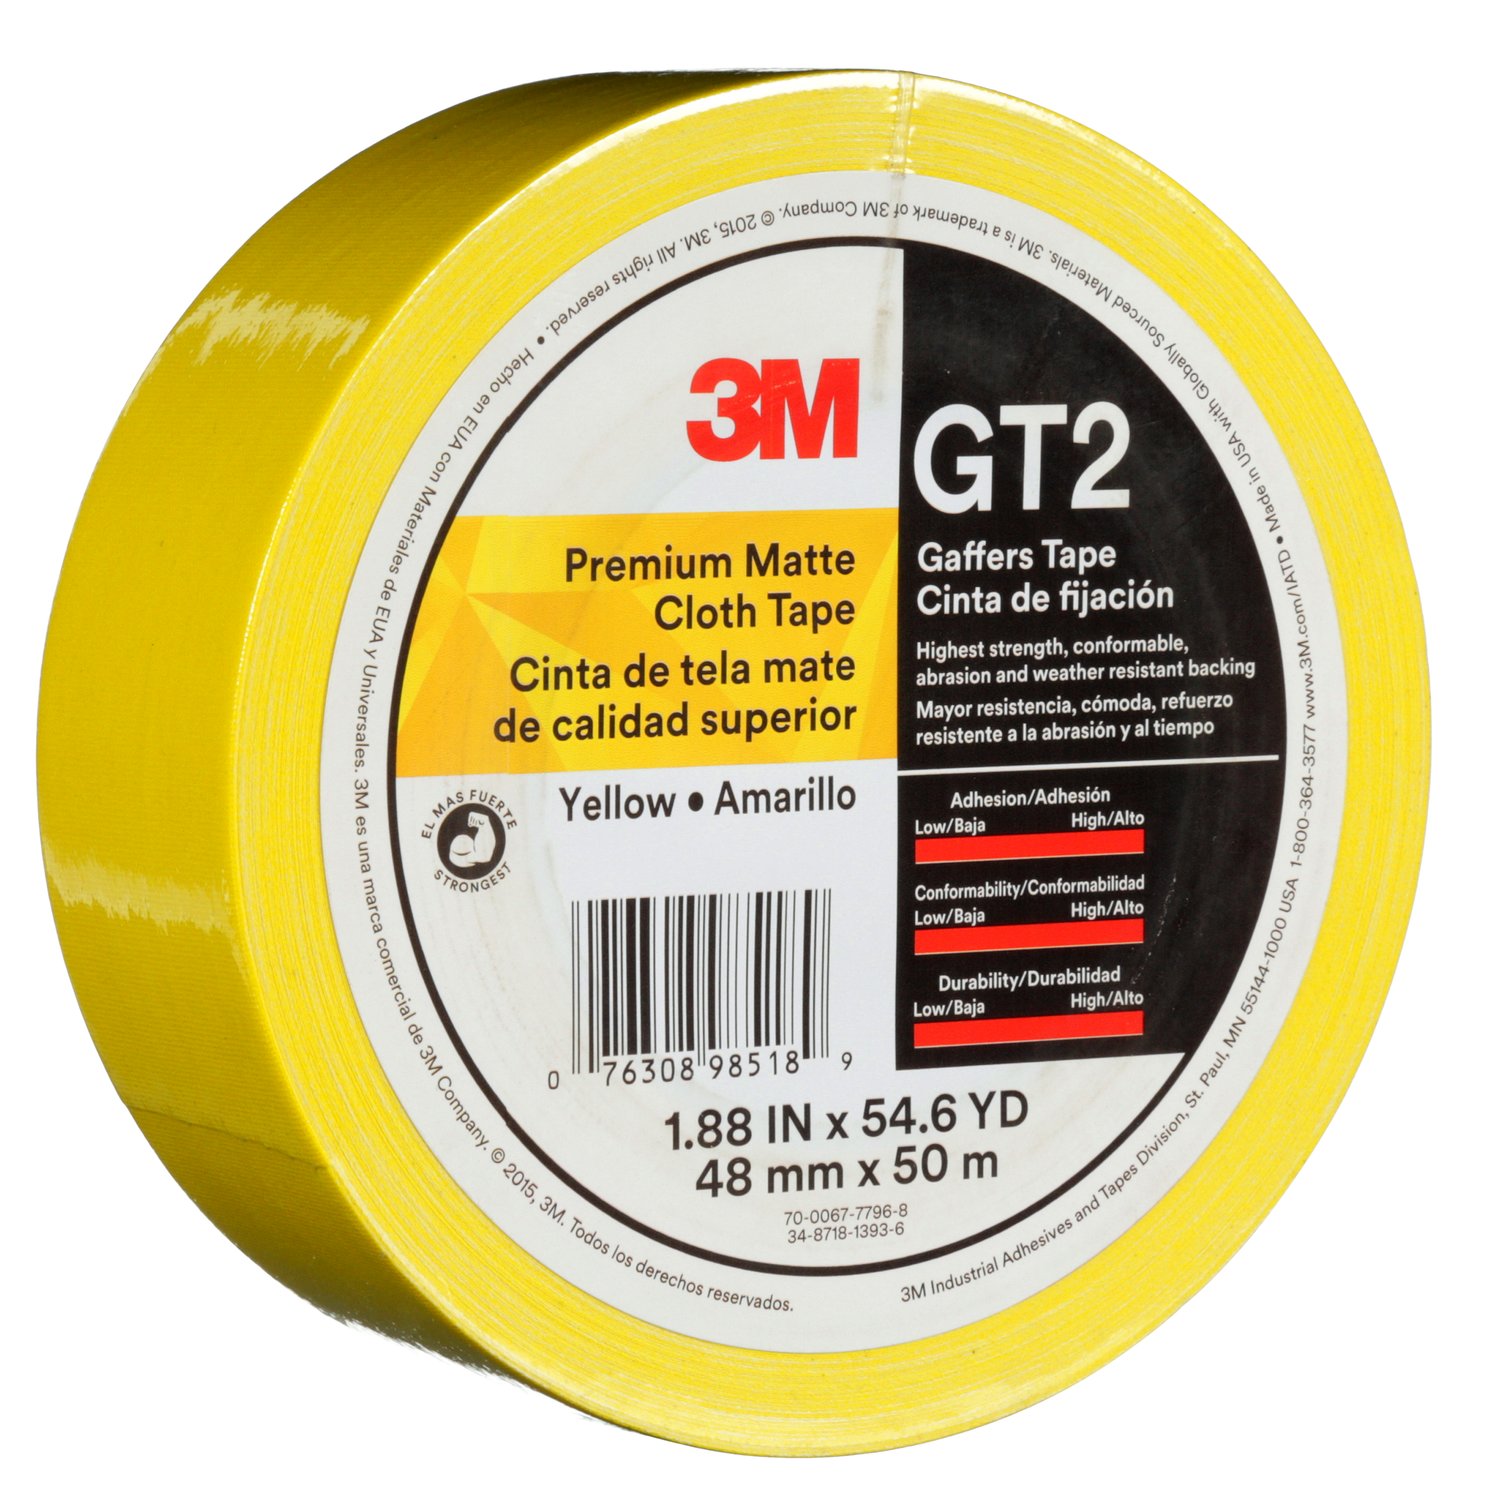 7010336133 - 3M Premium Matte Cloth (Gaffers) Tape GT2, Yellow, 48 mm x 50 m, 11
mil, 24/Case